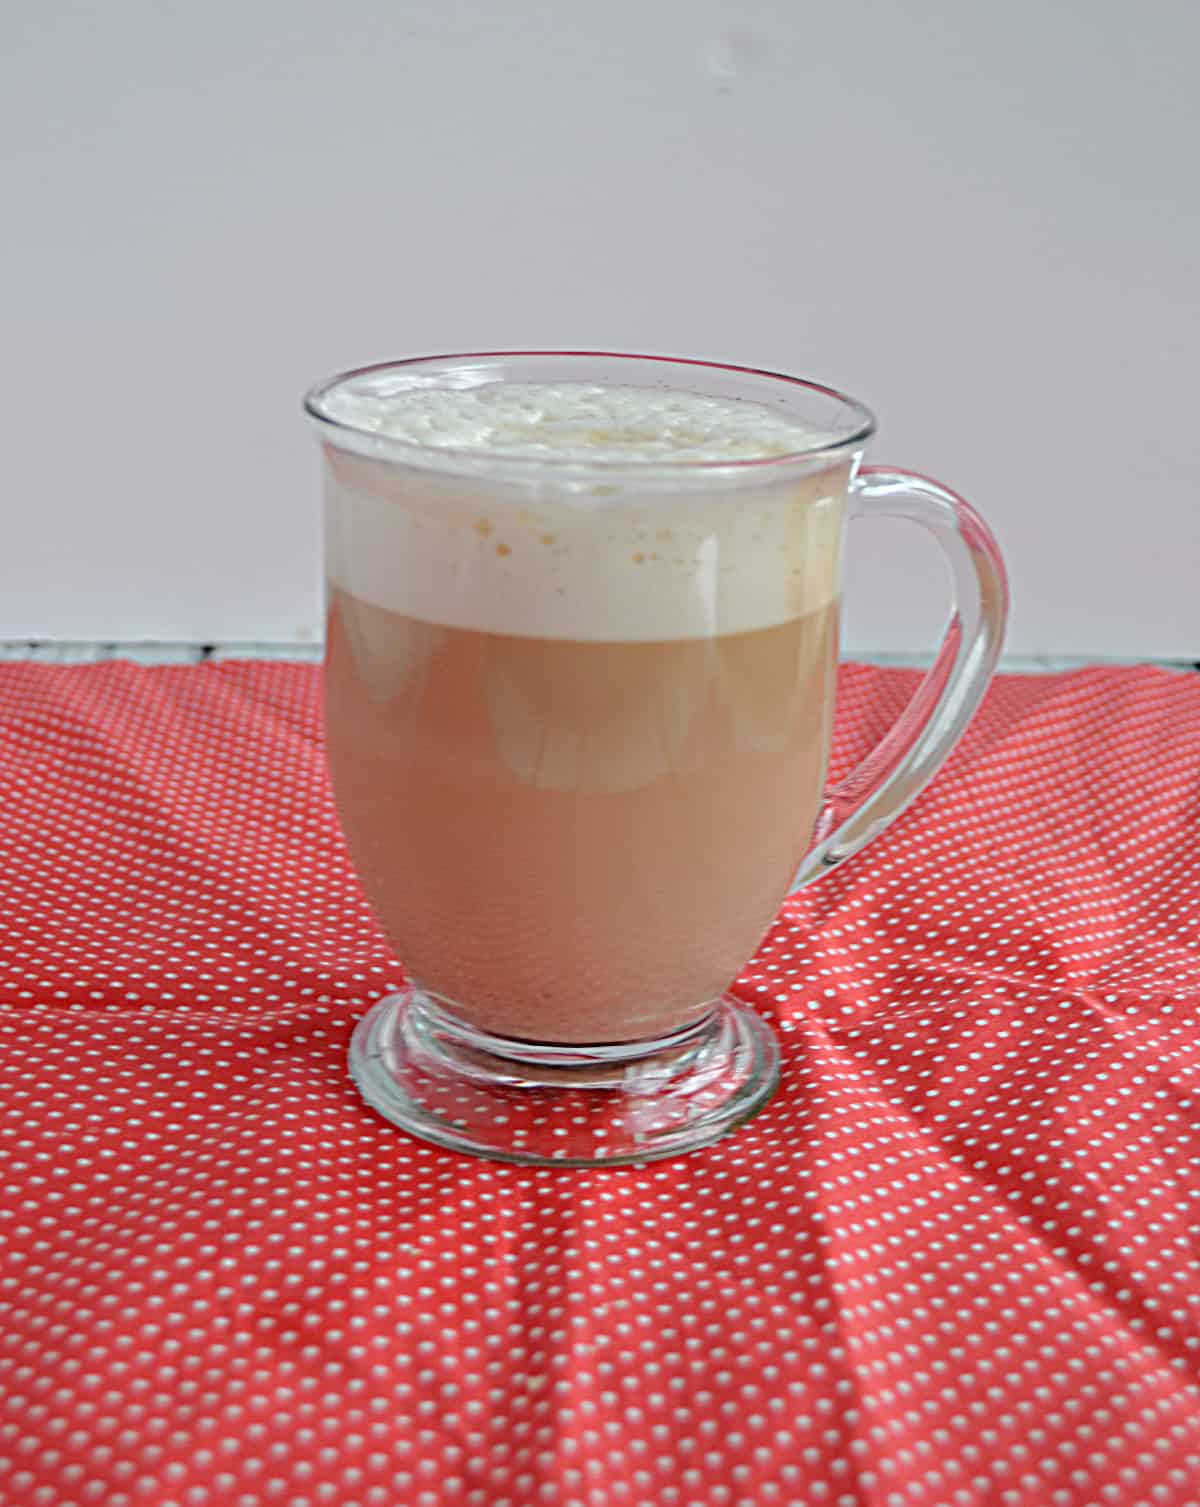 A mug of Gingerbread Latte.